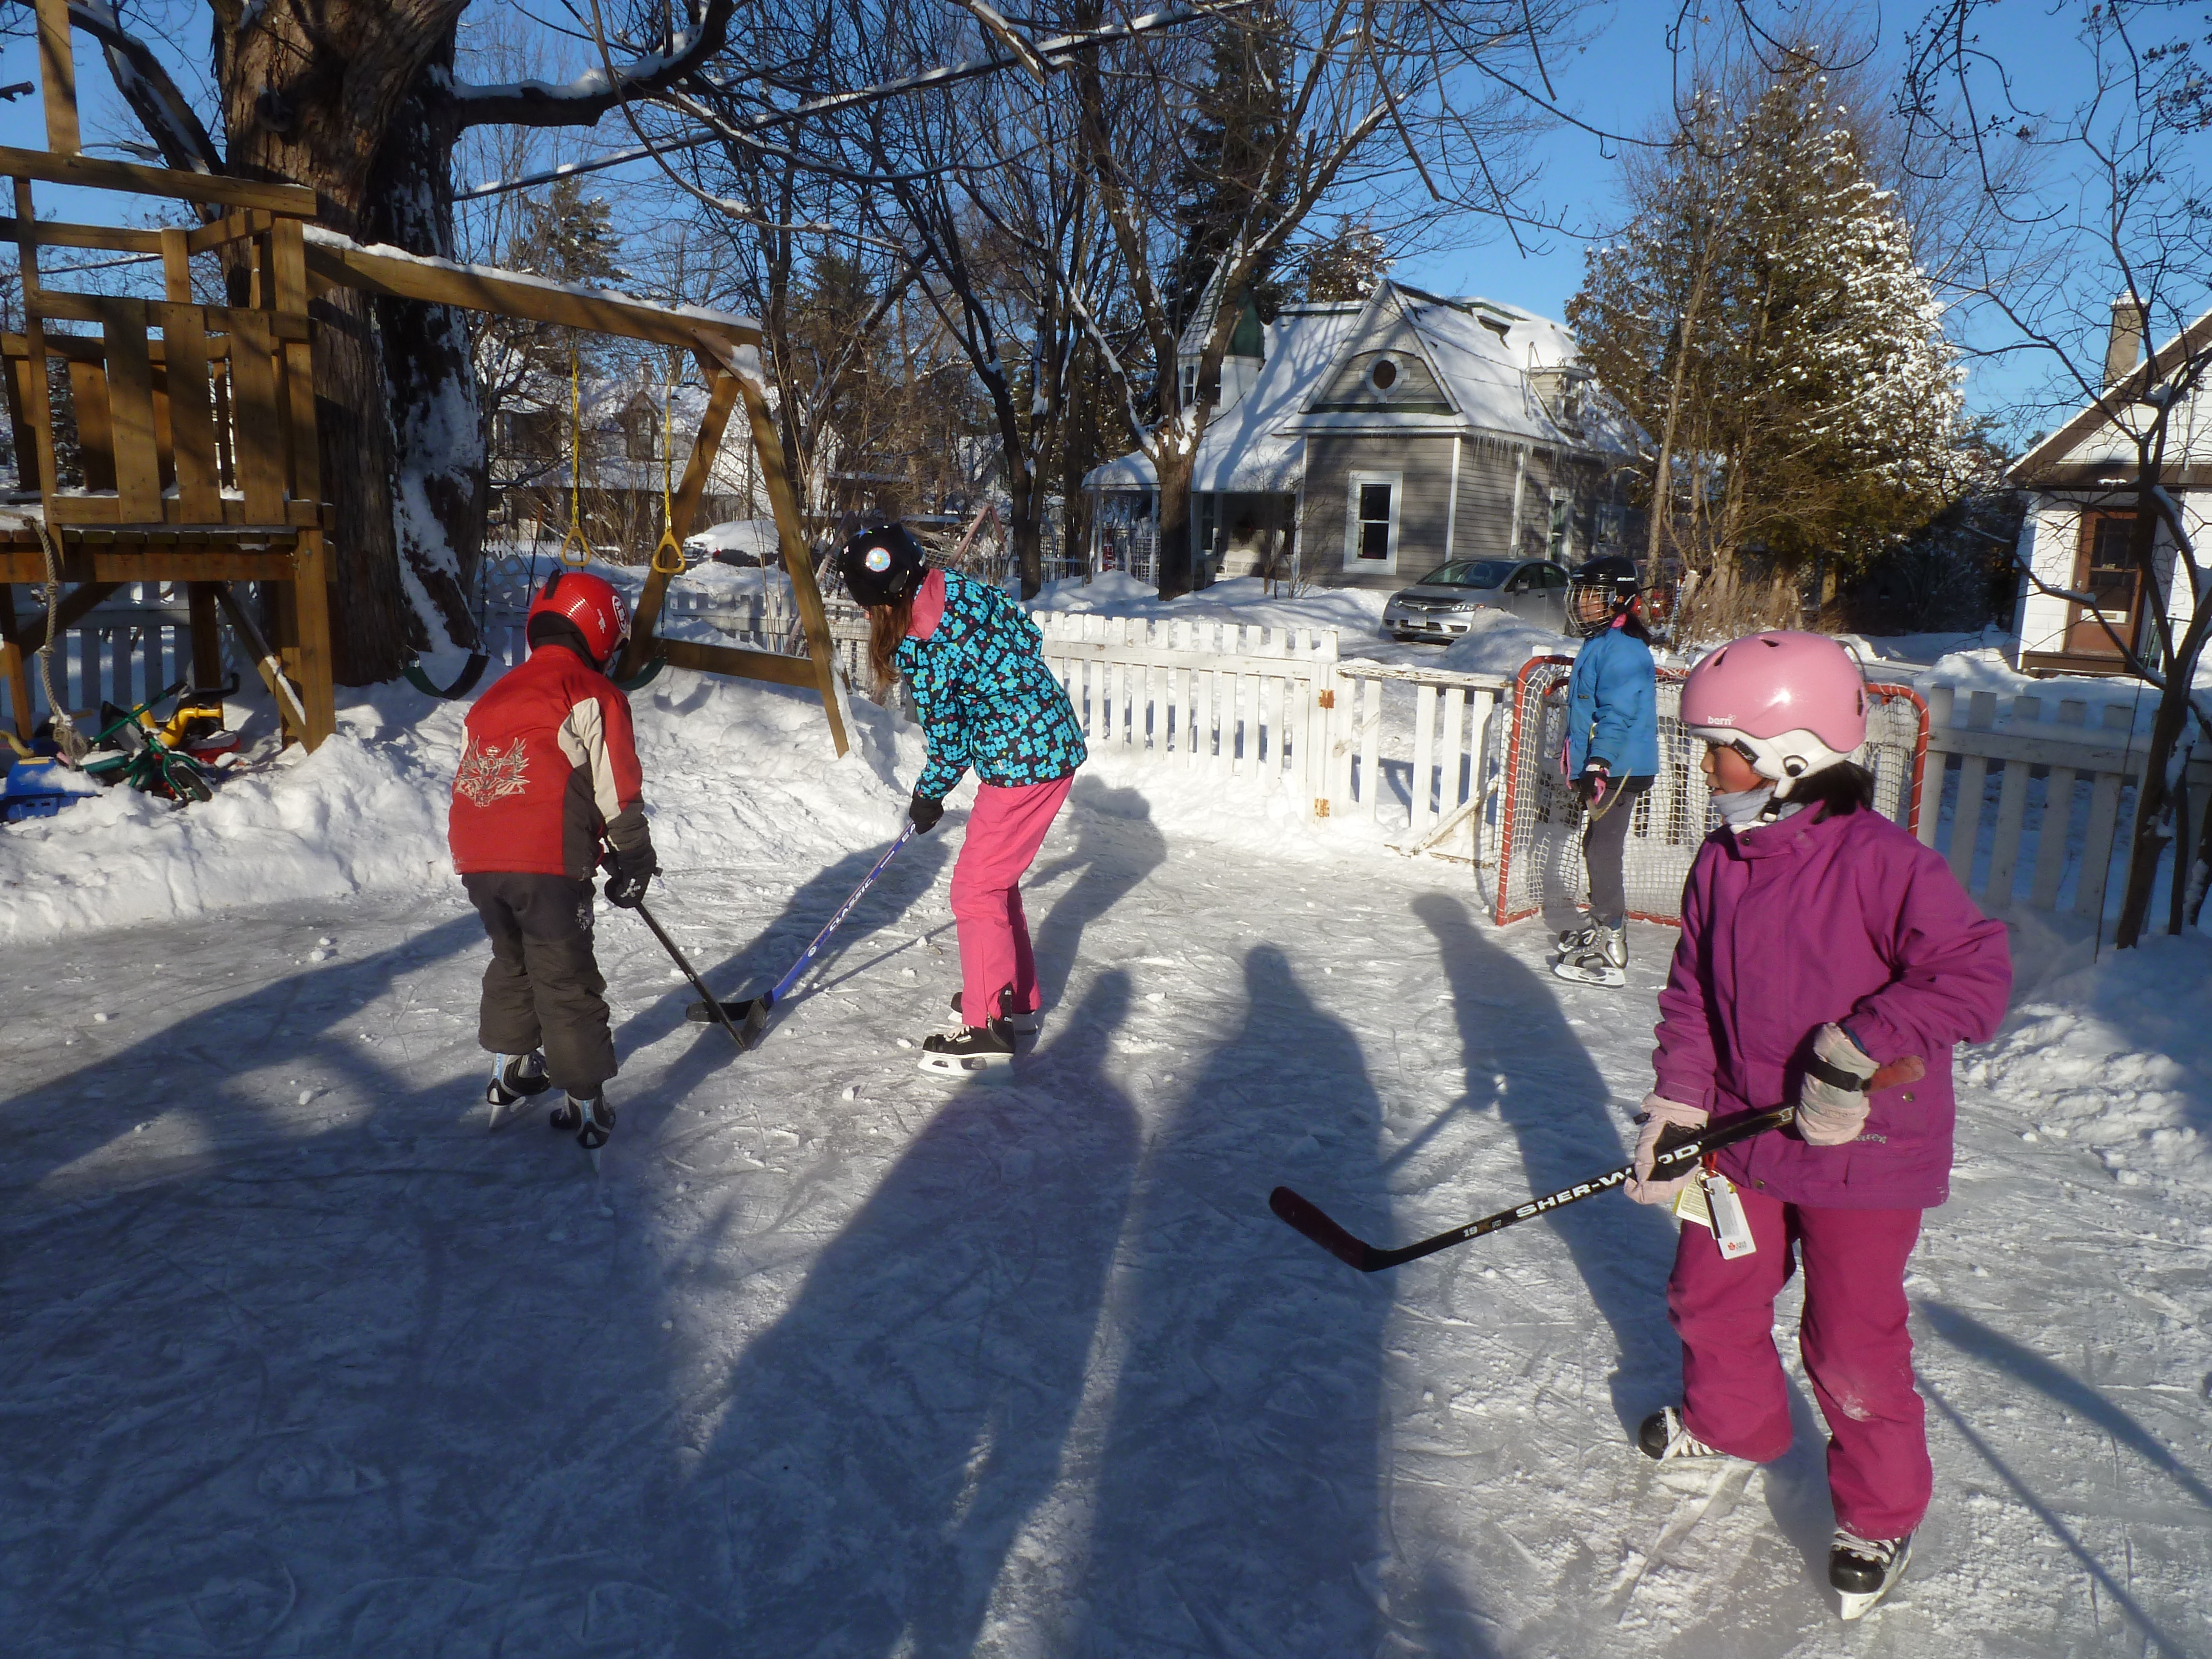 Kids playing outdoor hockey on a snowy backyard